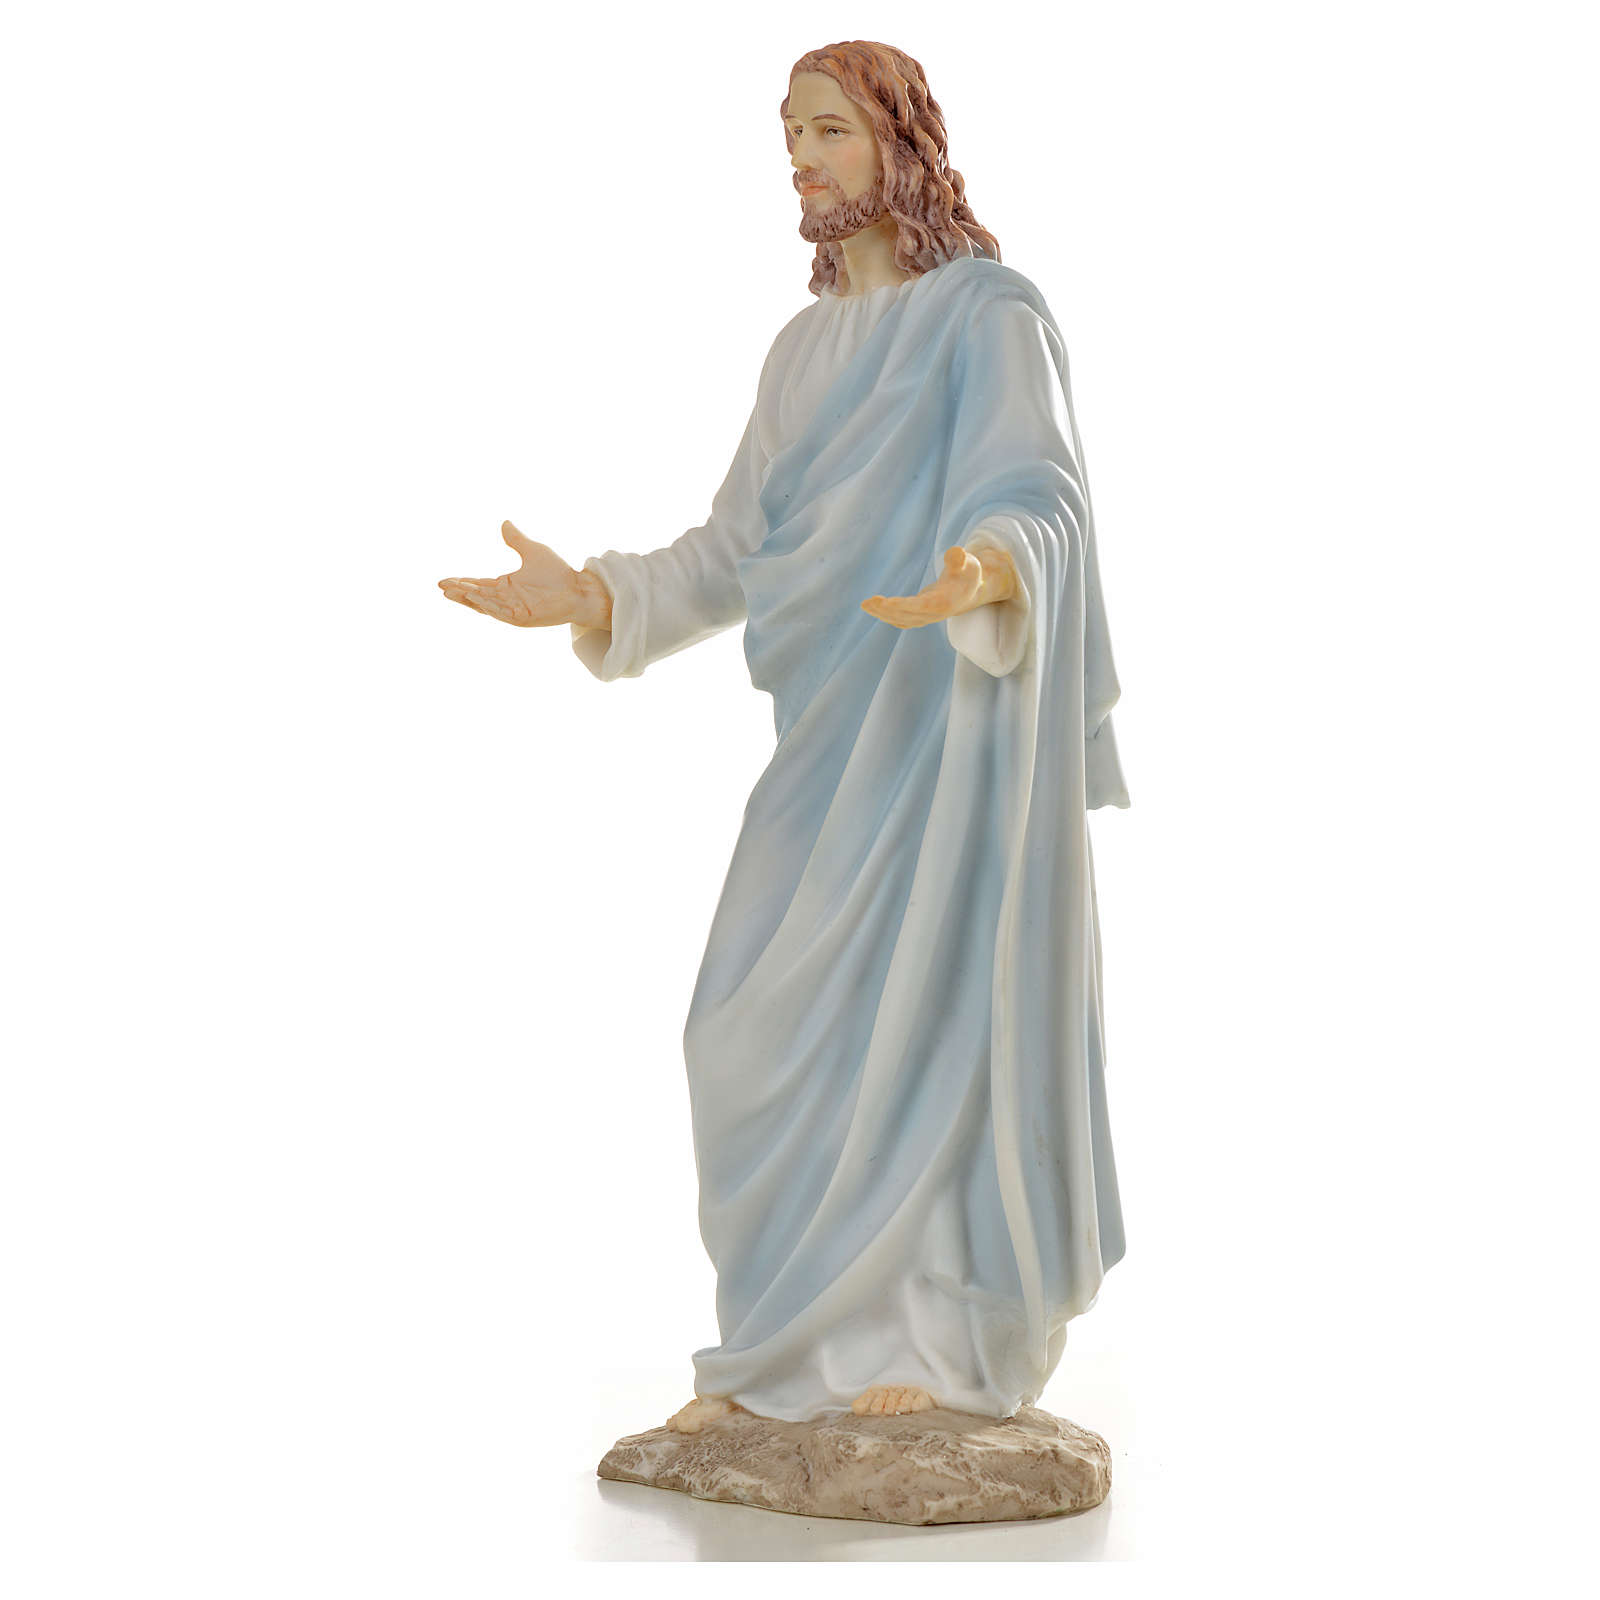 Jesus statue in resin, 30cm | online sales on HOLYART.com